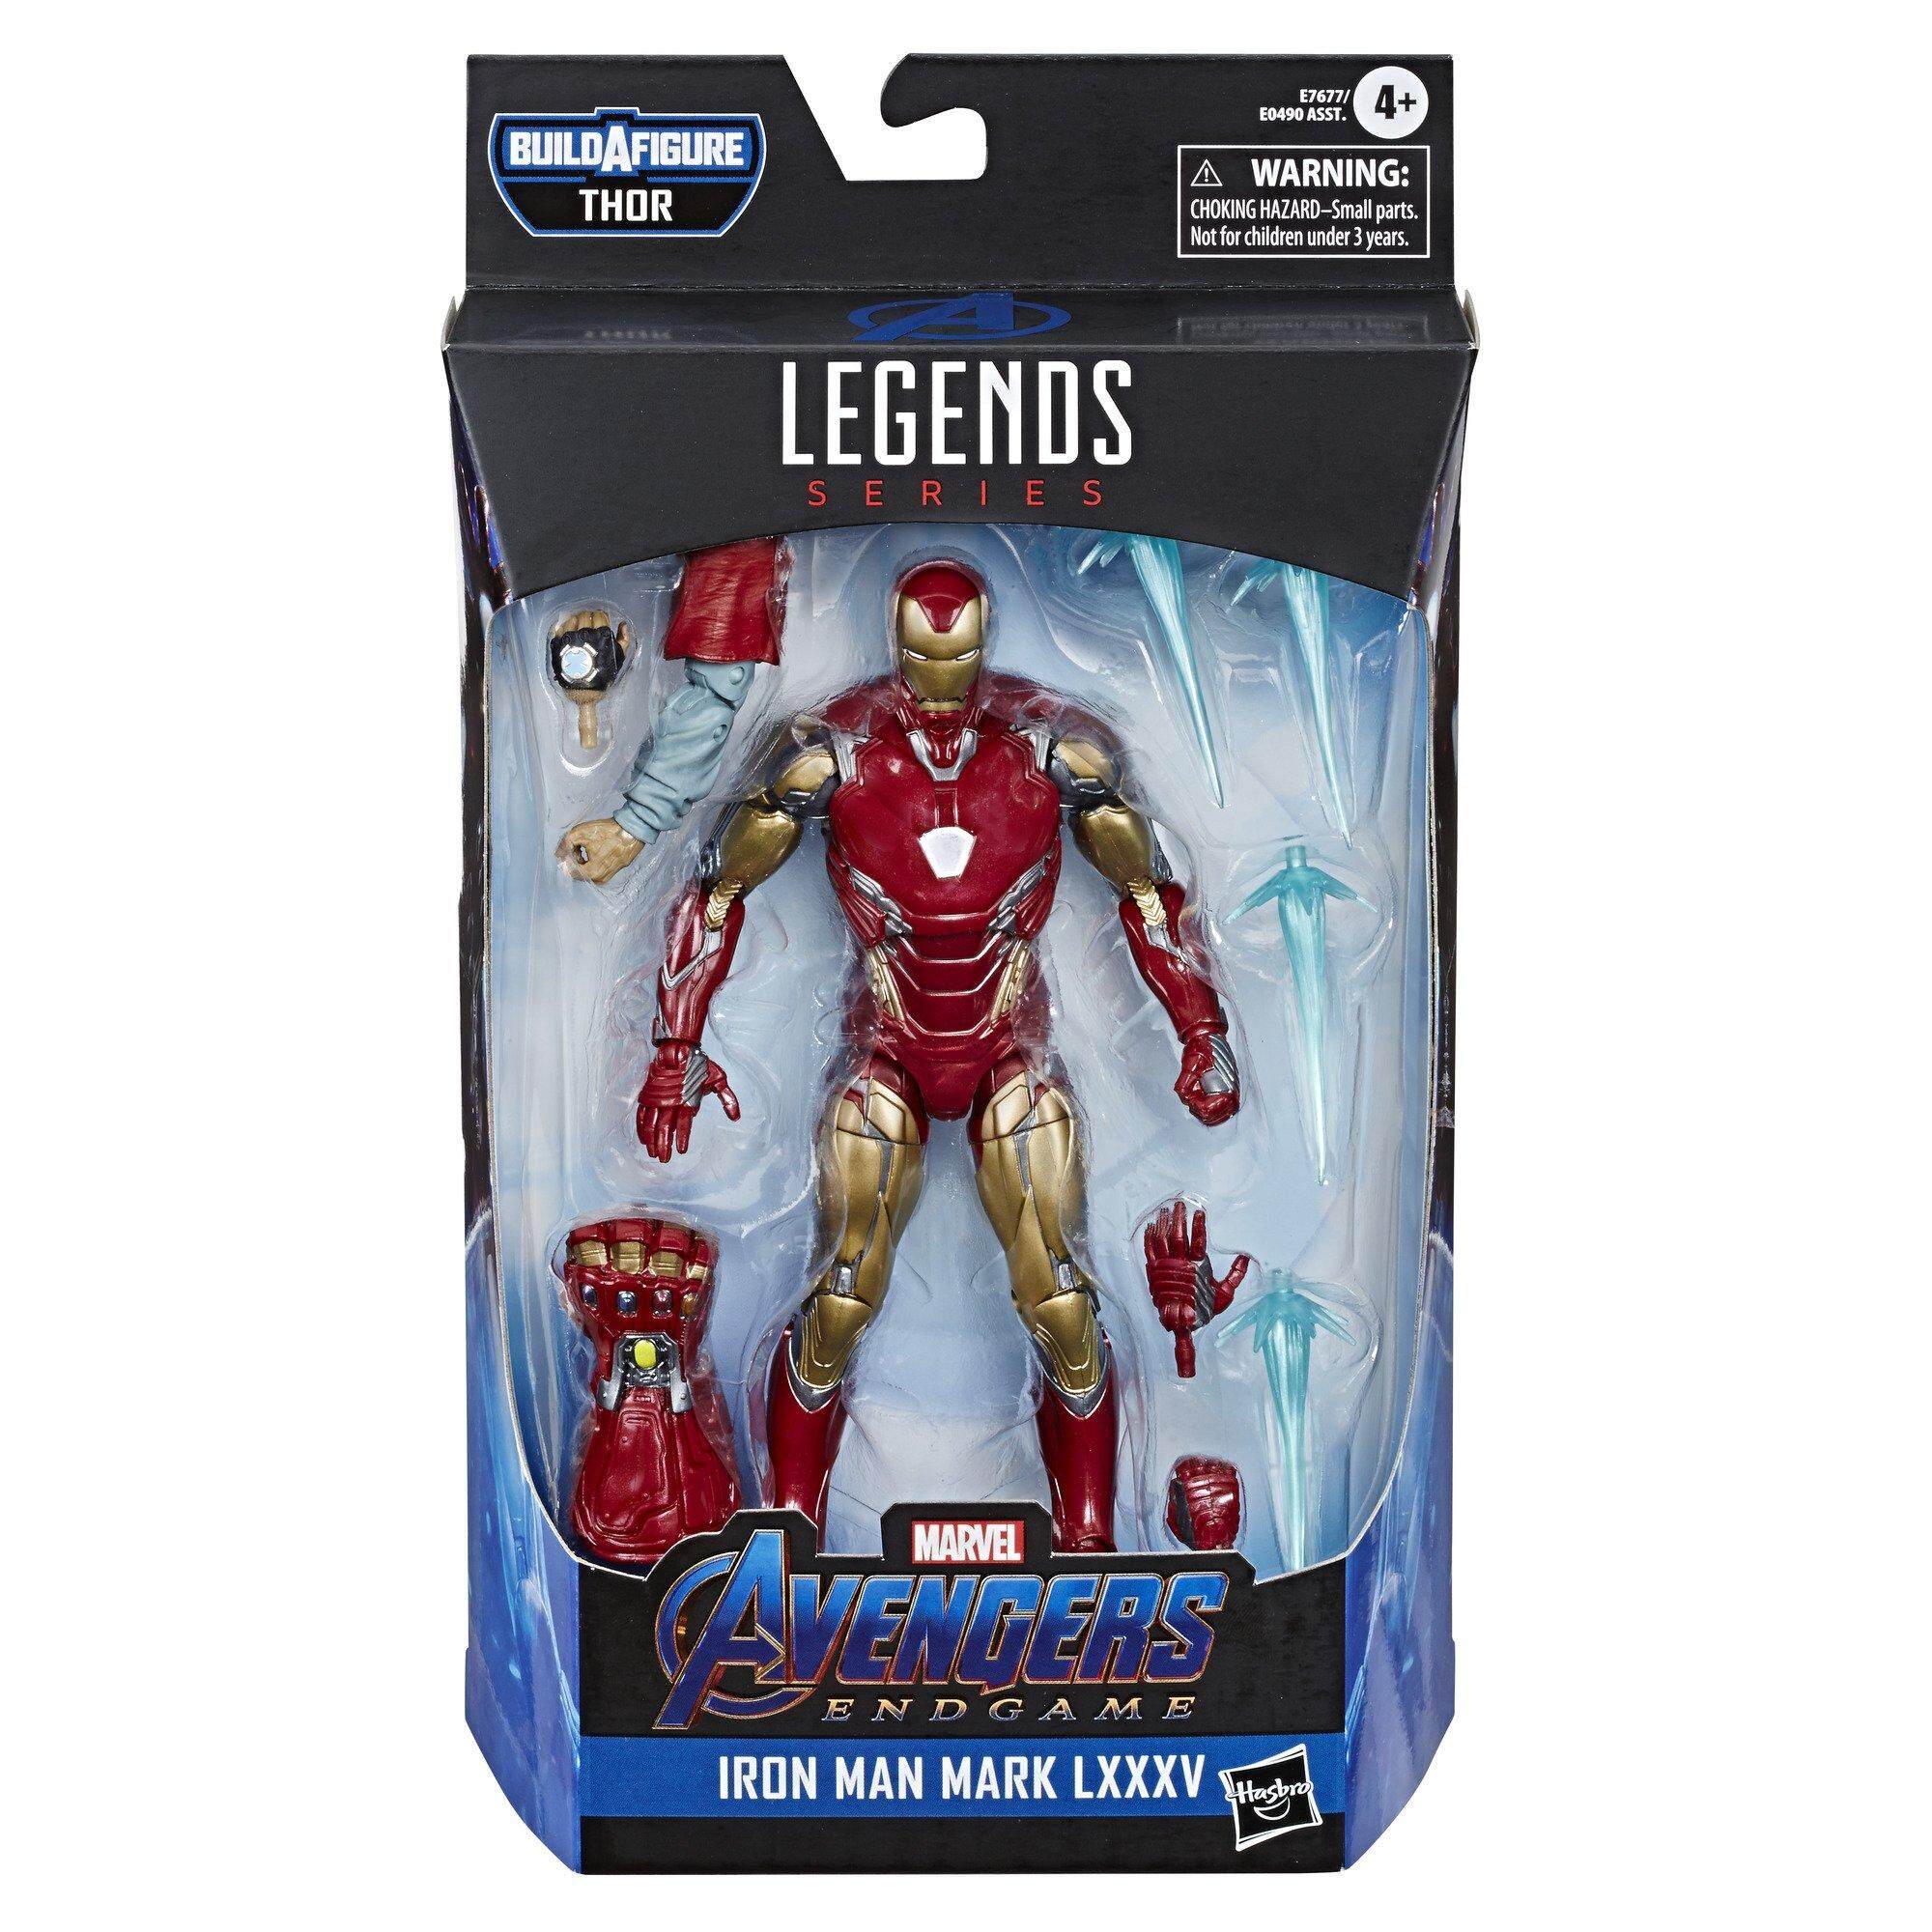 Marvel Legends Series Avengers: Endgame Iron Man Mark LXXXV Figure สินค้าลิขสิทธิ์แท้ไอร่อนแมน มาร์ค85 เอนท์เกมส์ เวฟ 3 จากบัฟทอร์อ้วน